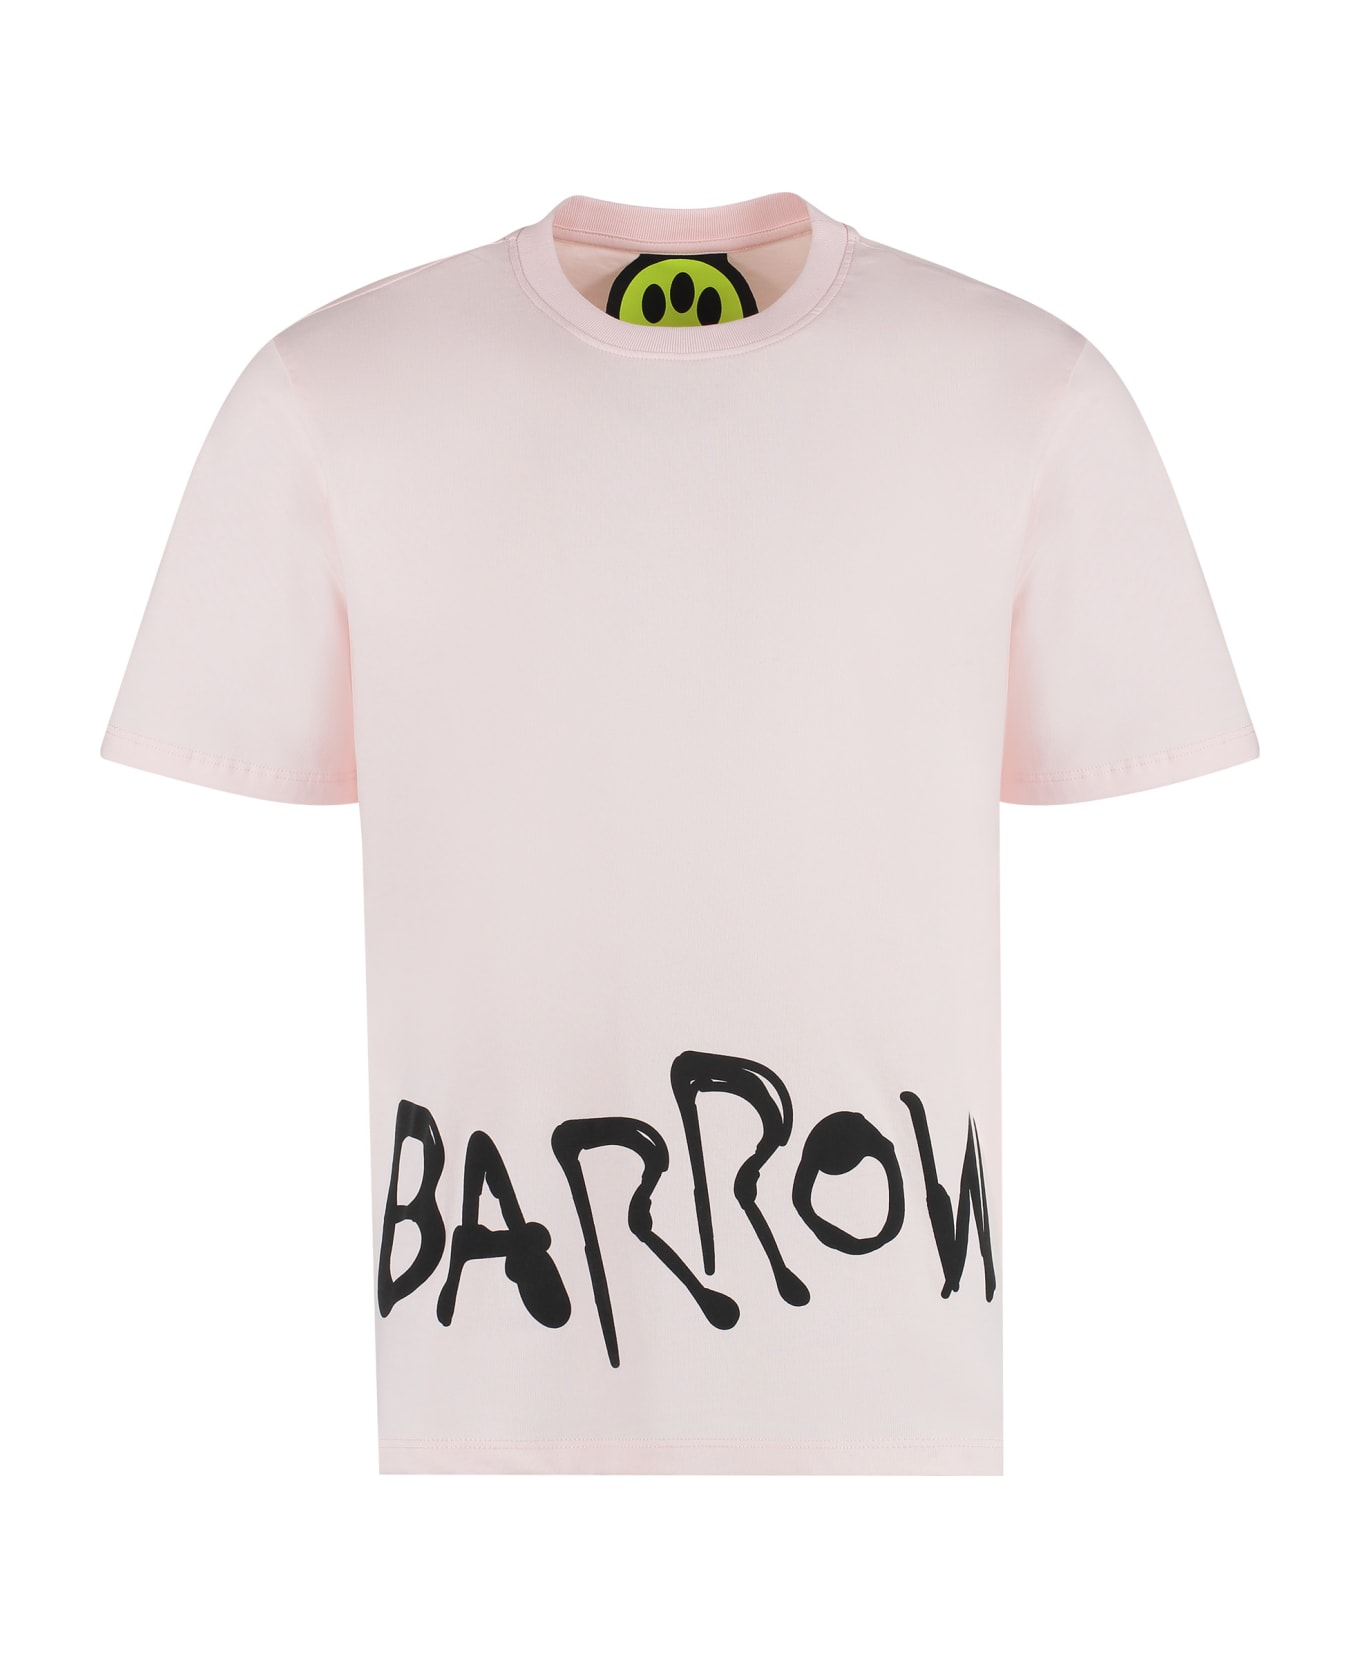 Barrow Printed Cotton T-shirt - Light Pink シャツ